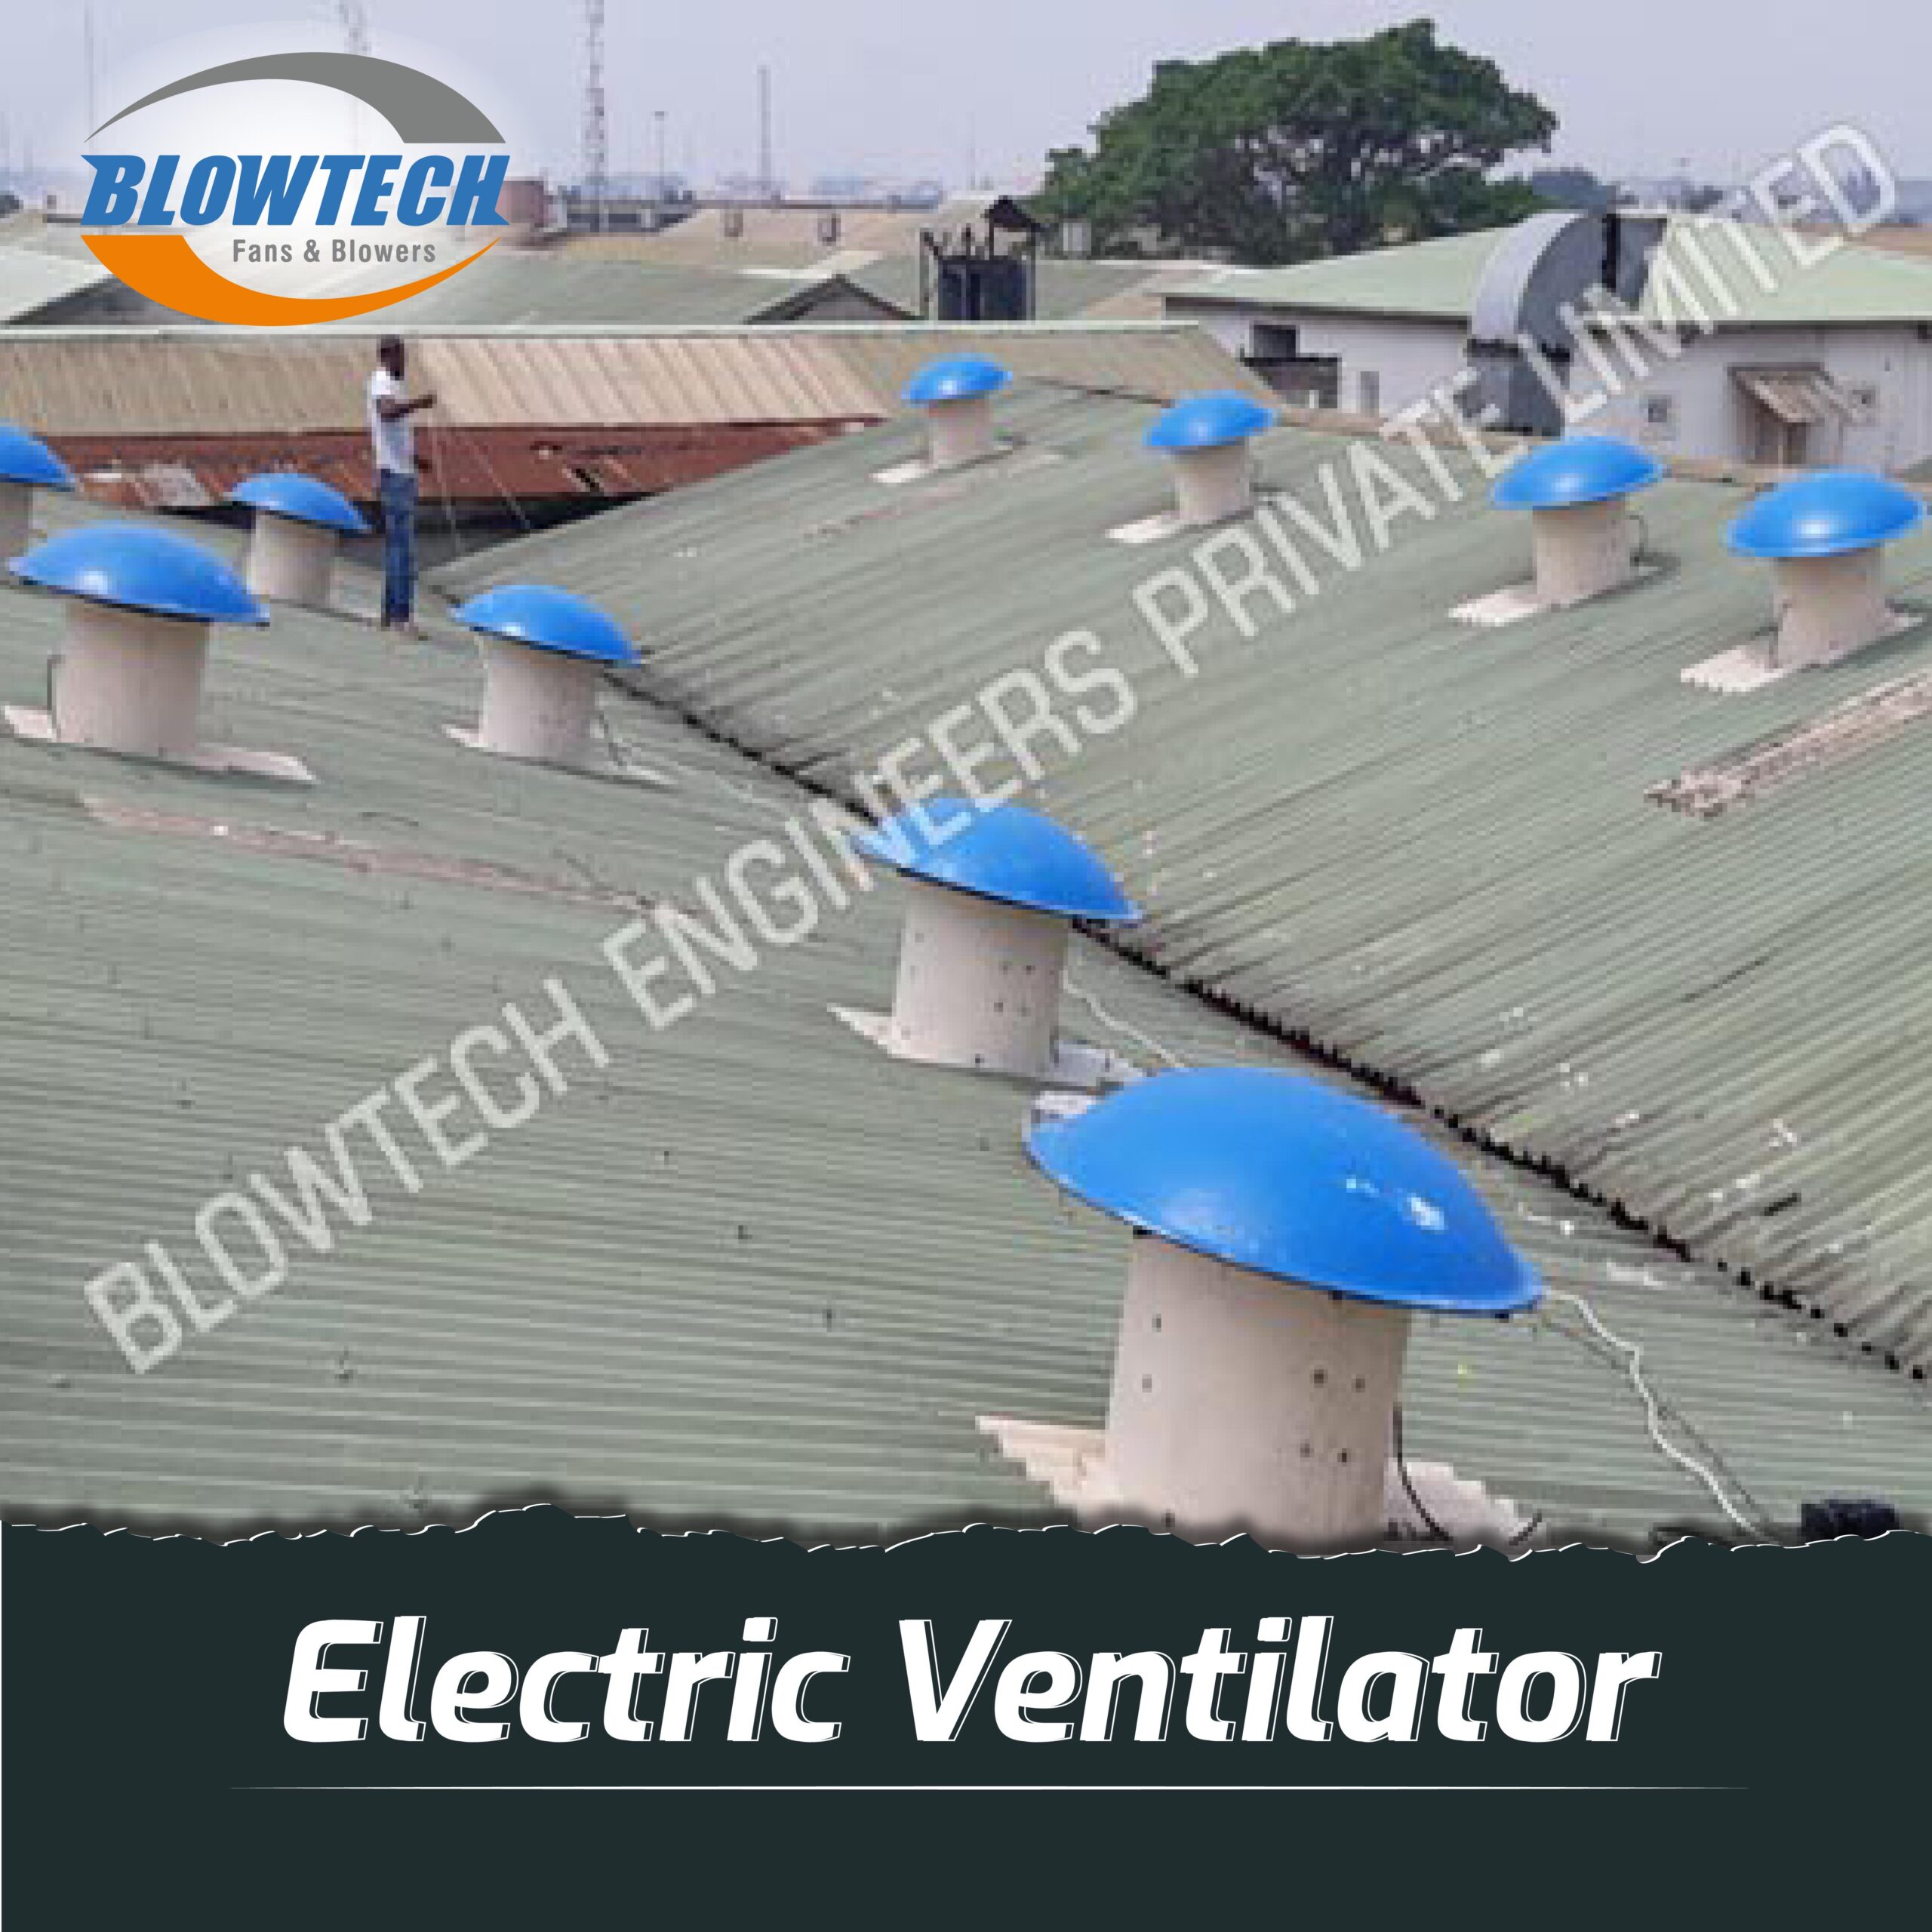 Electric Ventilator  manufacturer, supplier and exporter in Mumbai, India